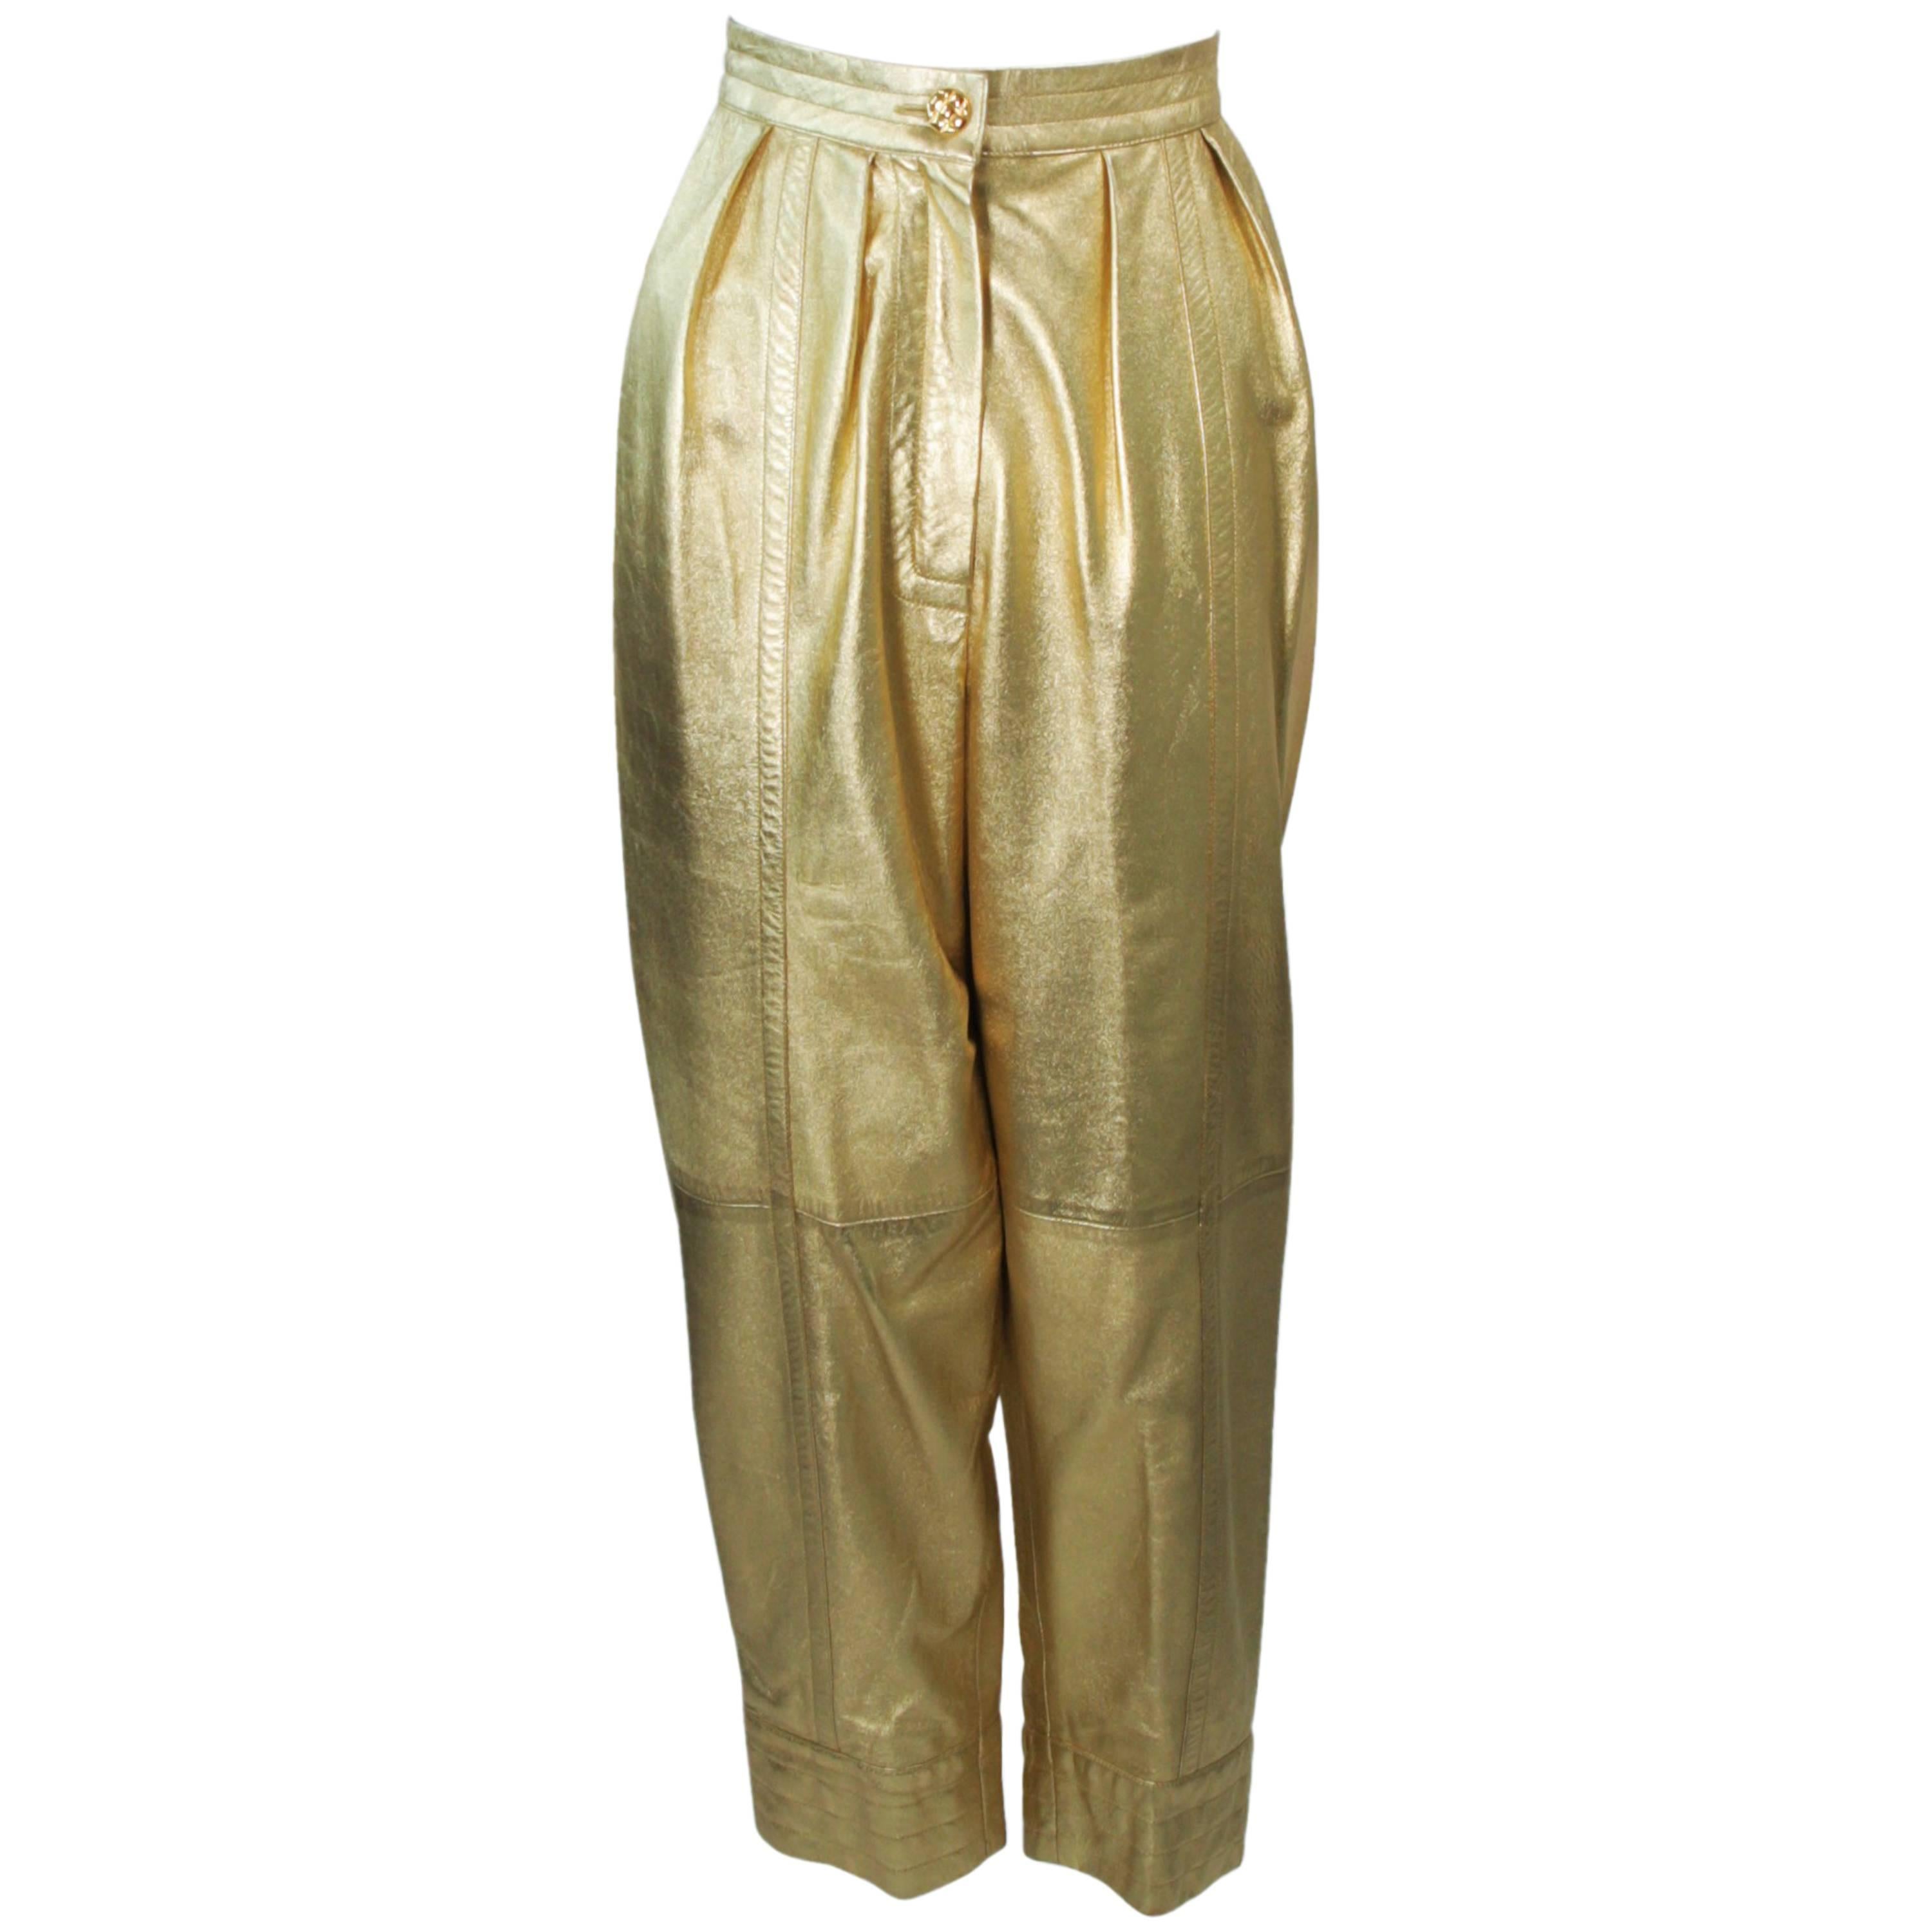 YVES SAINT LAURENT Gold Metallic Foil Leather Pleated Pants Joggers Size 38